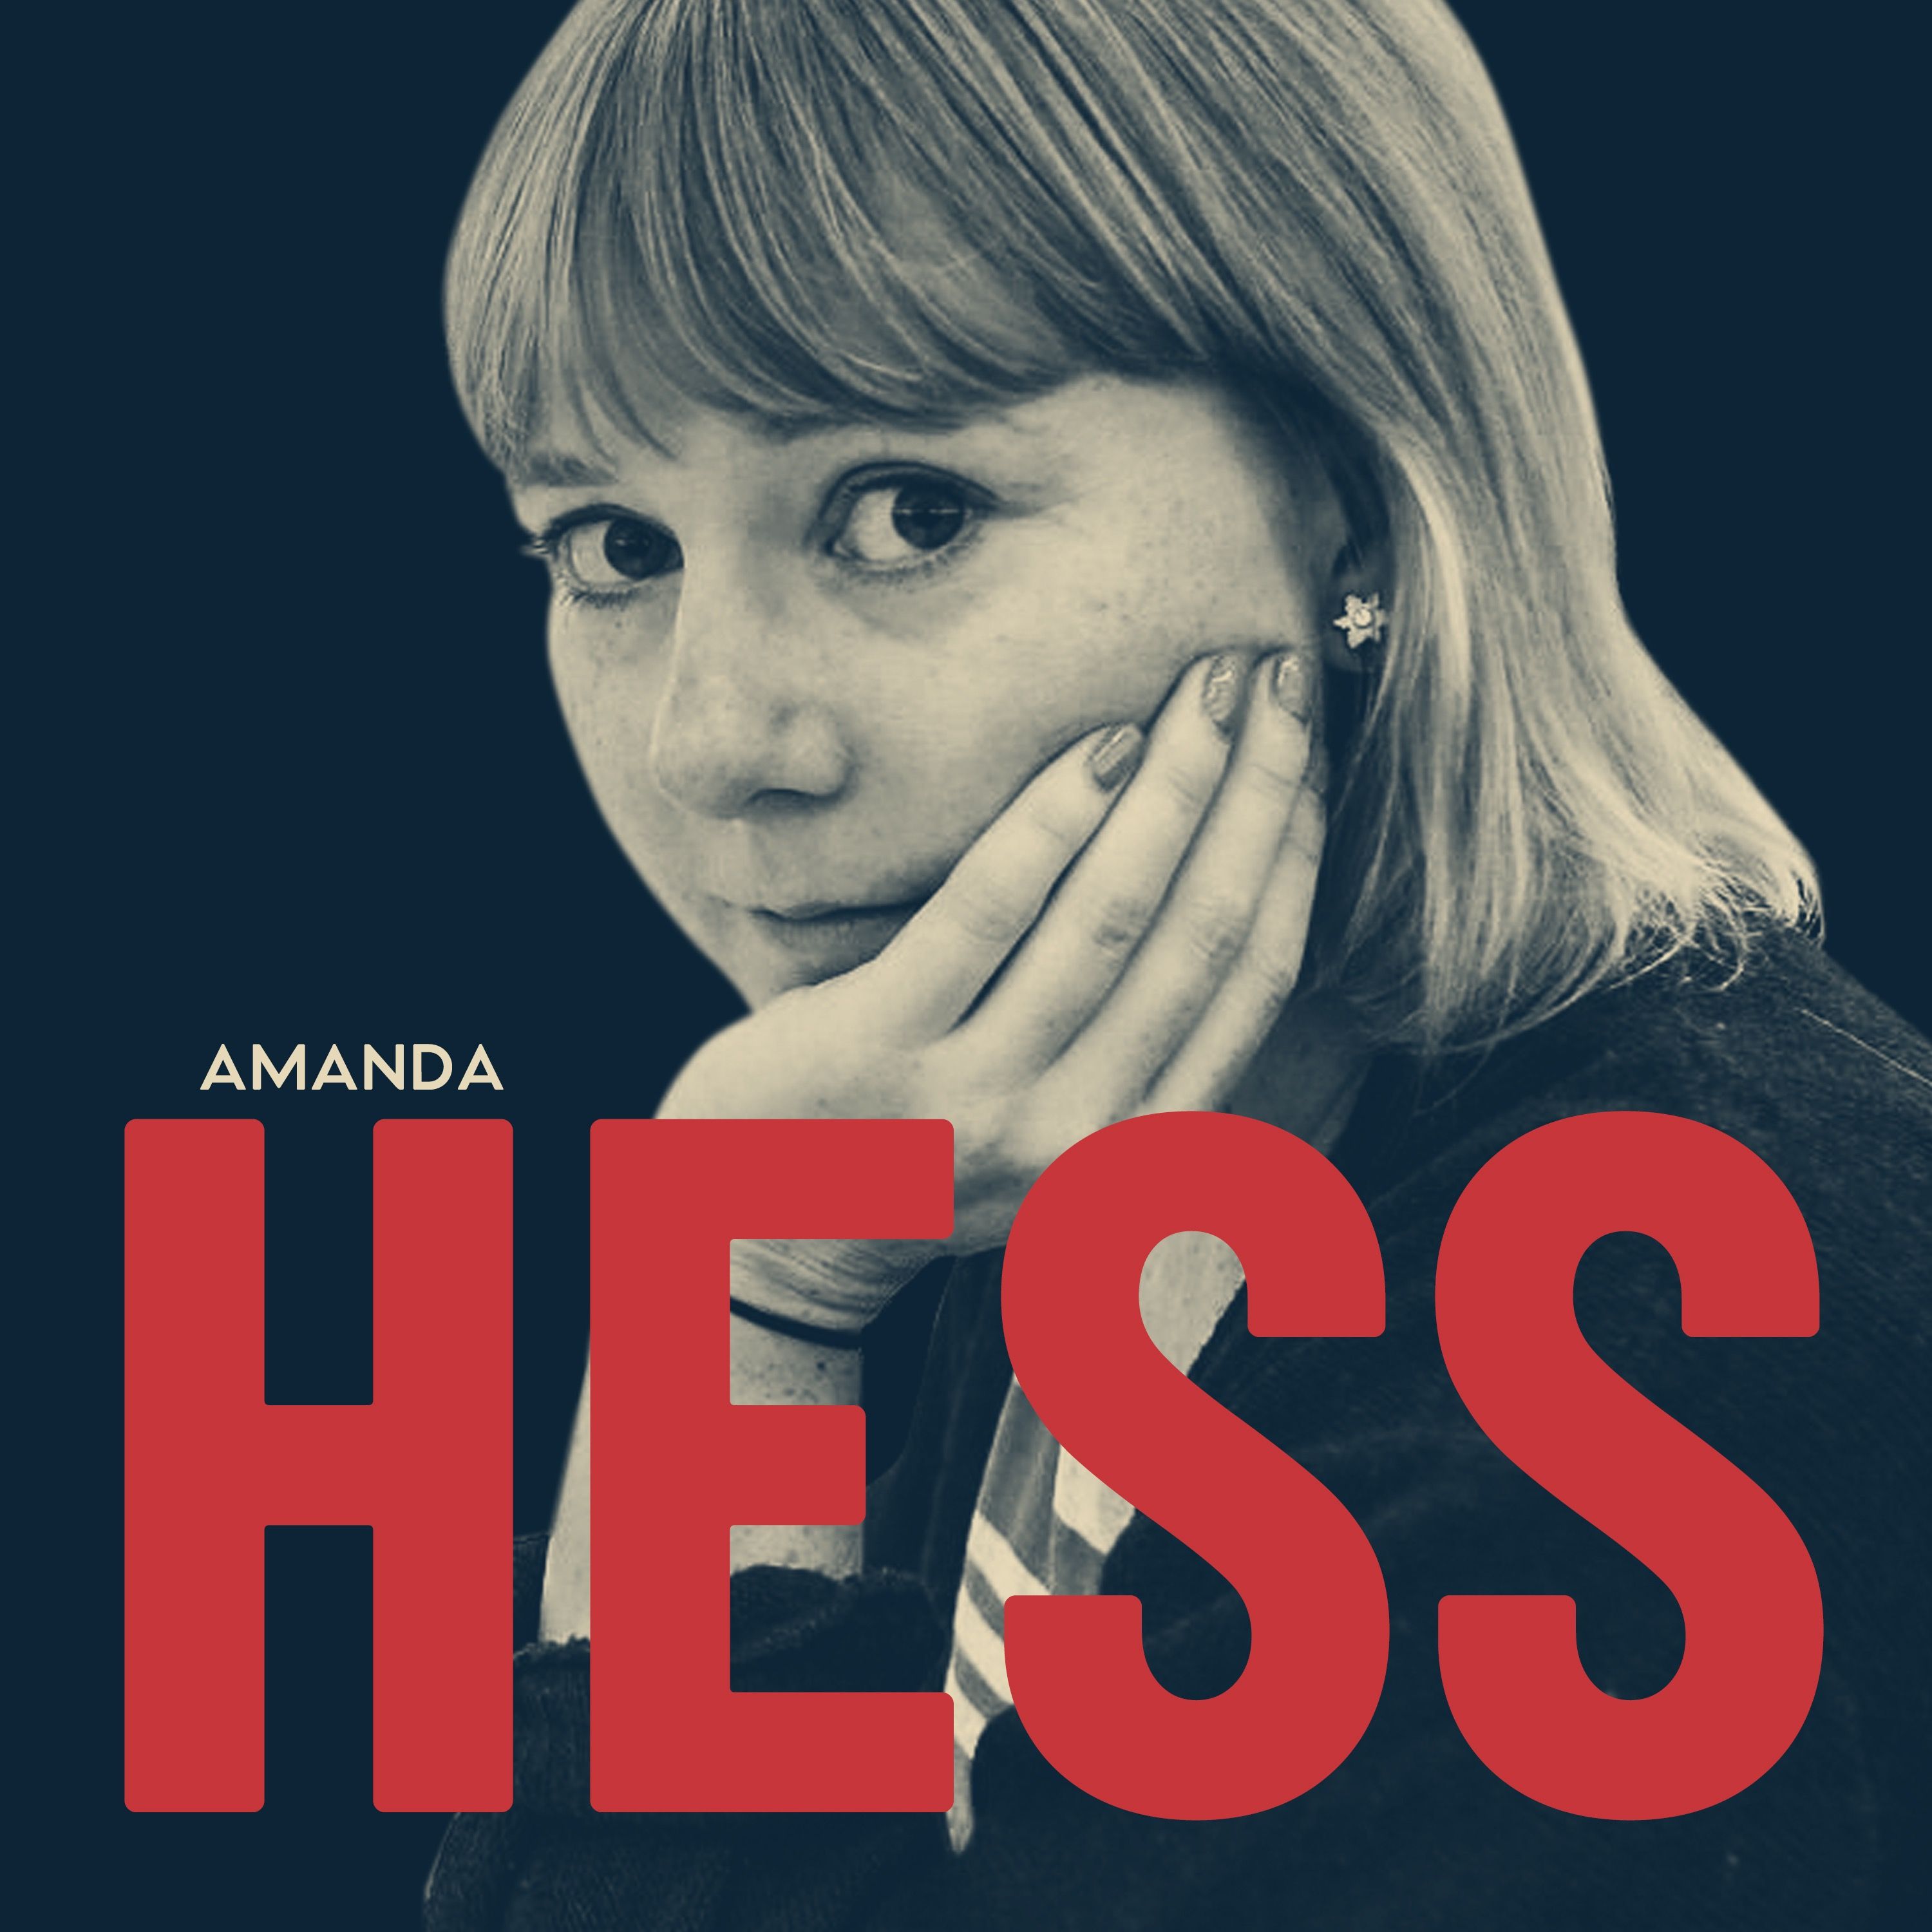 Amanda Hess